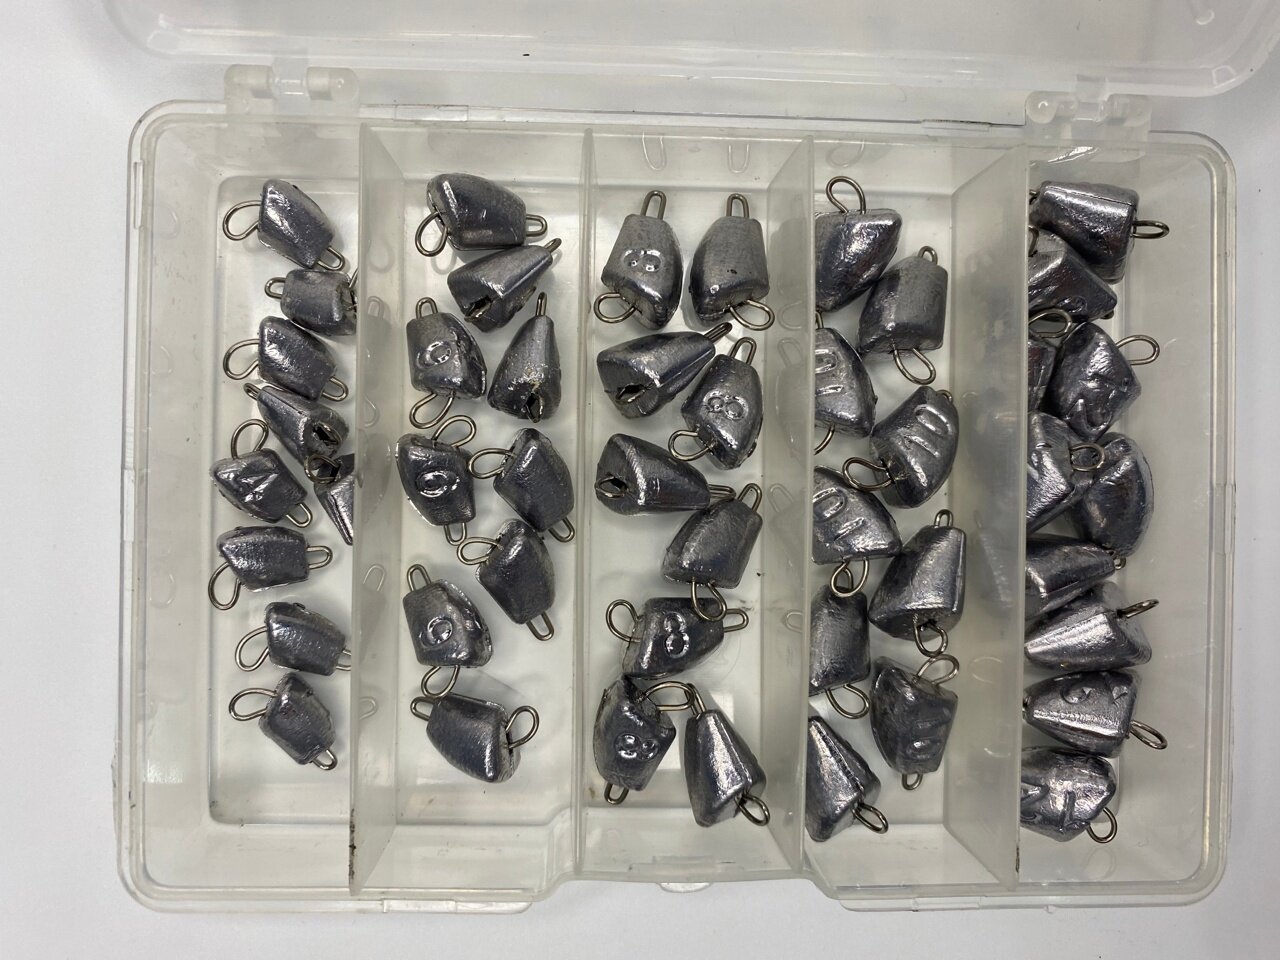 Груз рыболовный сапожок разборный, набор 4-12 грамм + коробка, скоба 0,8 мм, ( 50 шт )